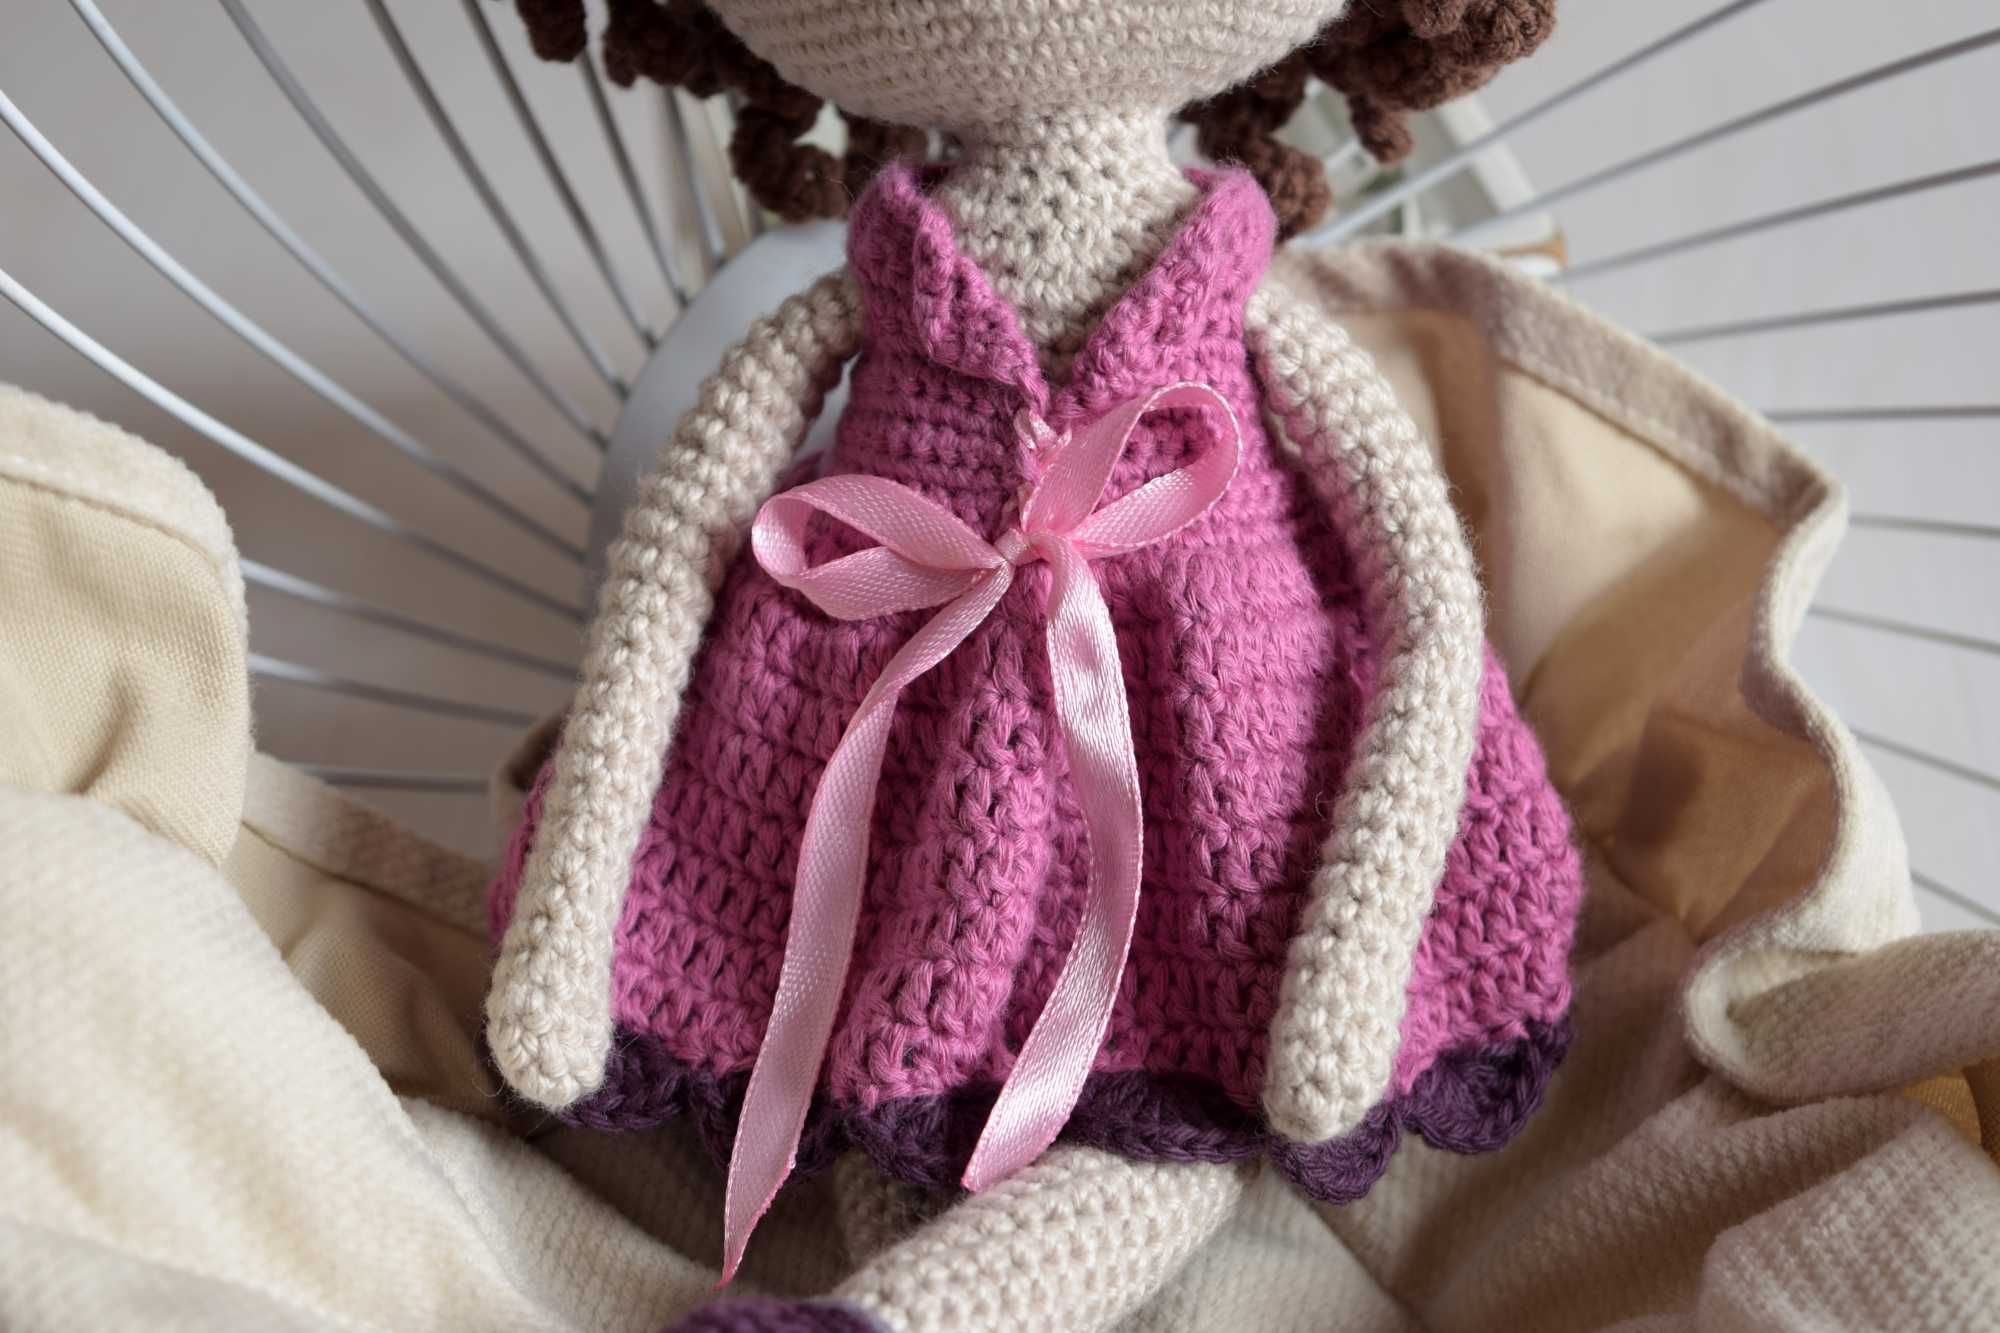 Bawełniana lalka lala maskotka, przytulanka na szydełku, handmade